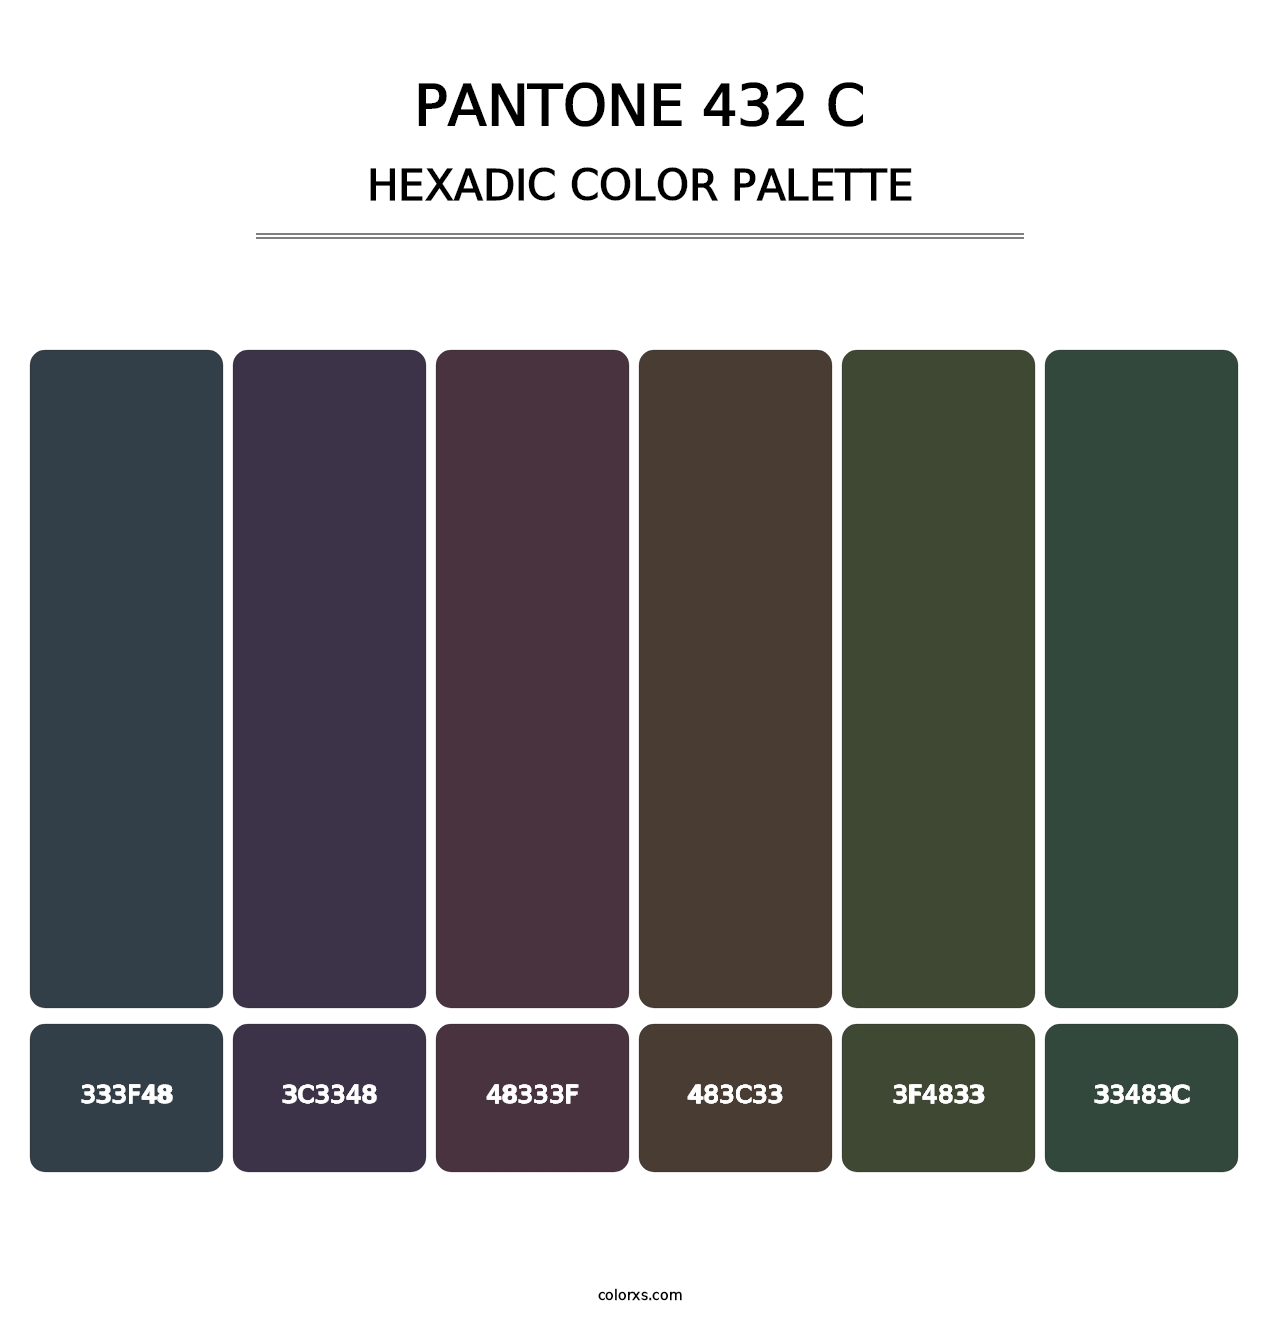 PANTONE 432 C - Hexadic Color Palette